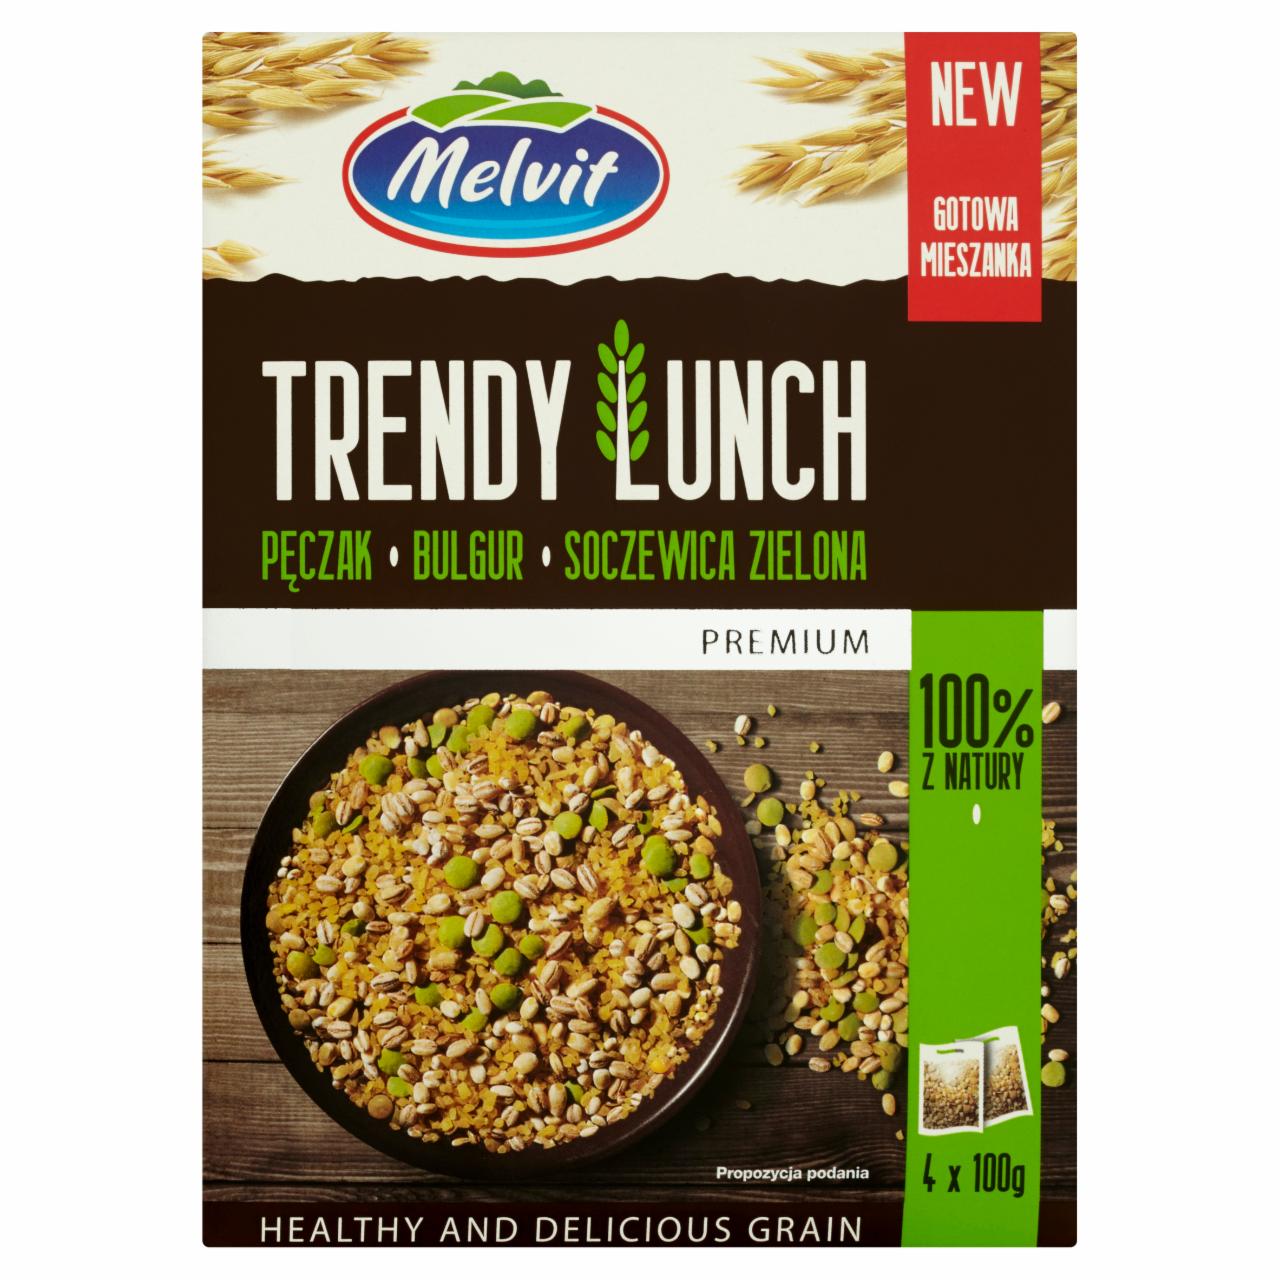 Képek - Trendy lunch árpa, bulgur, lencse 4 x